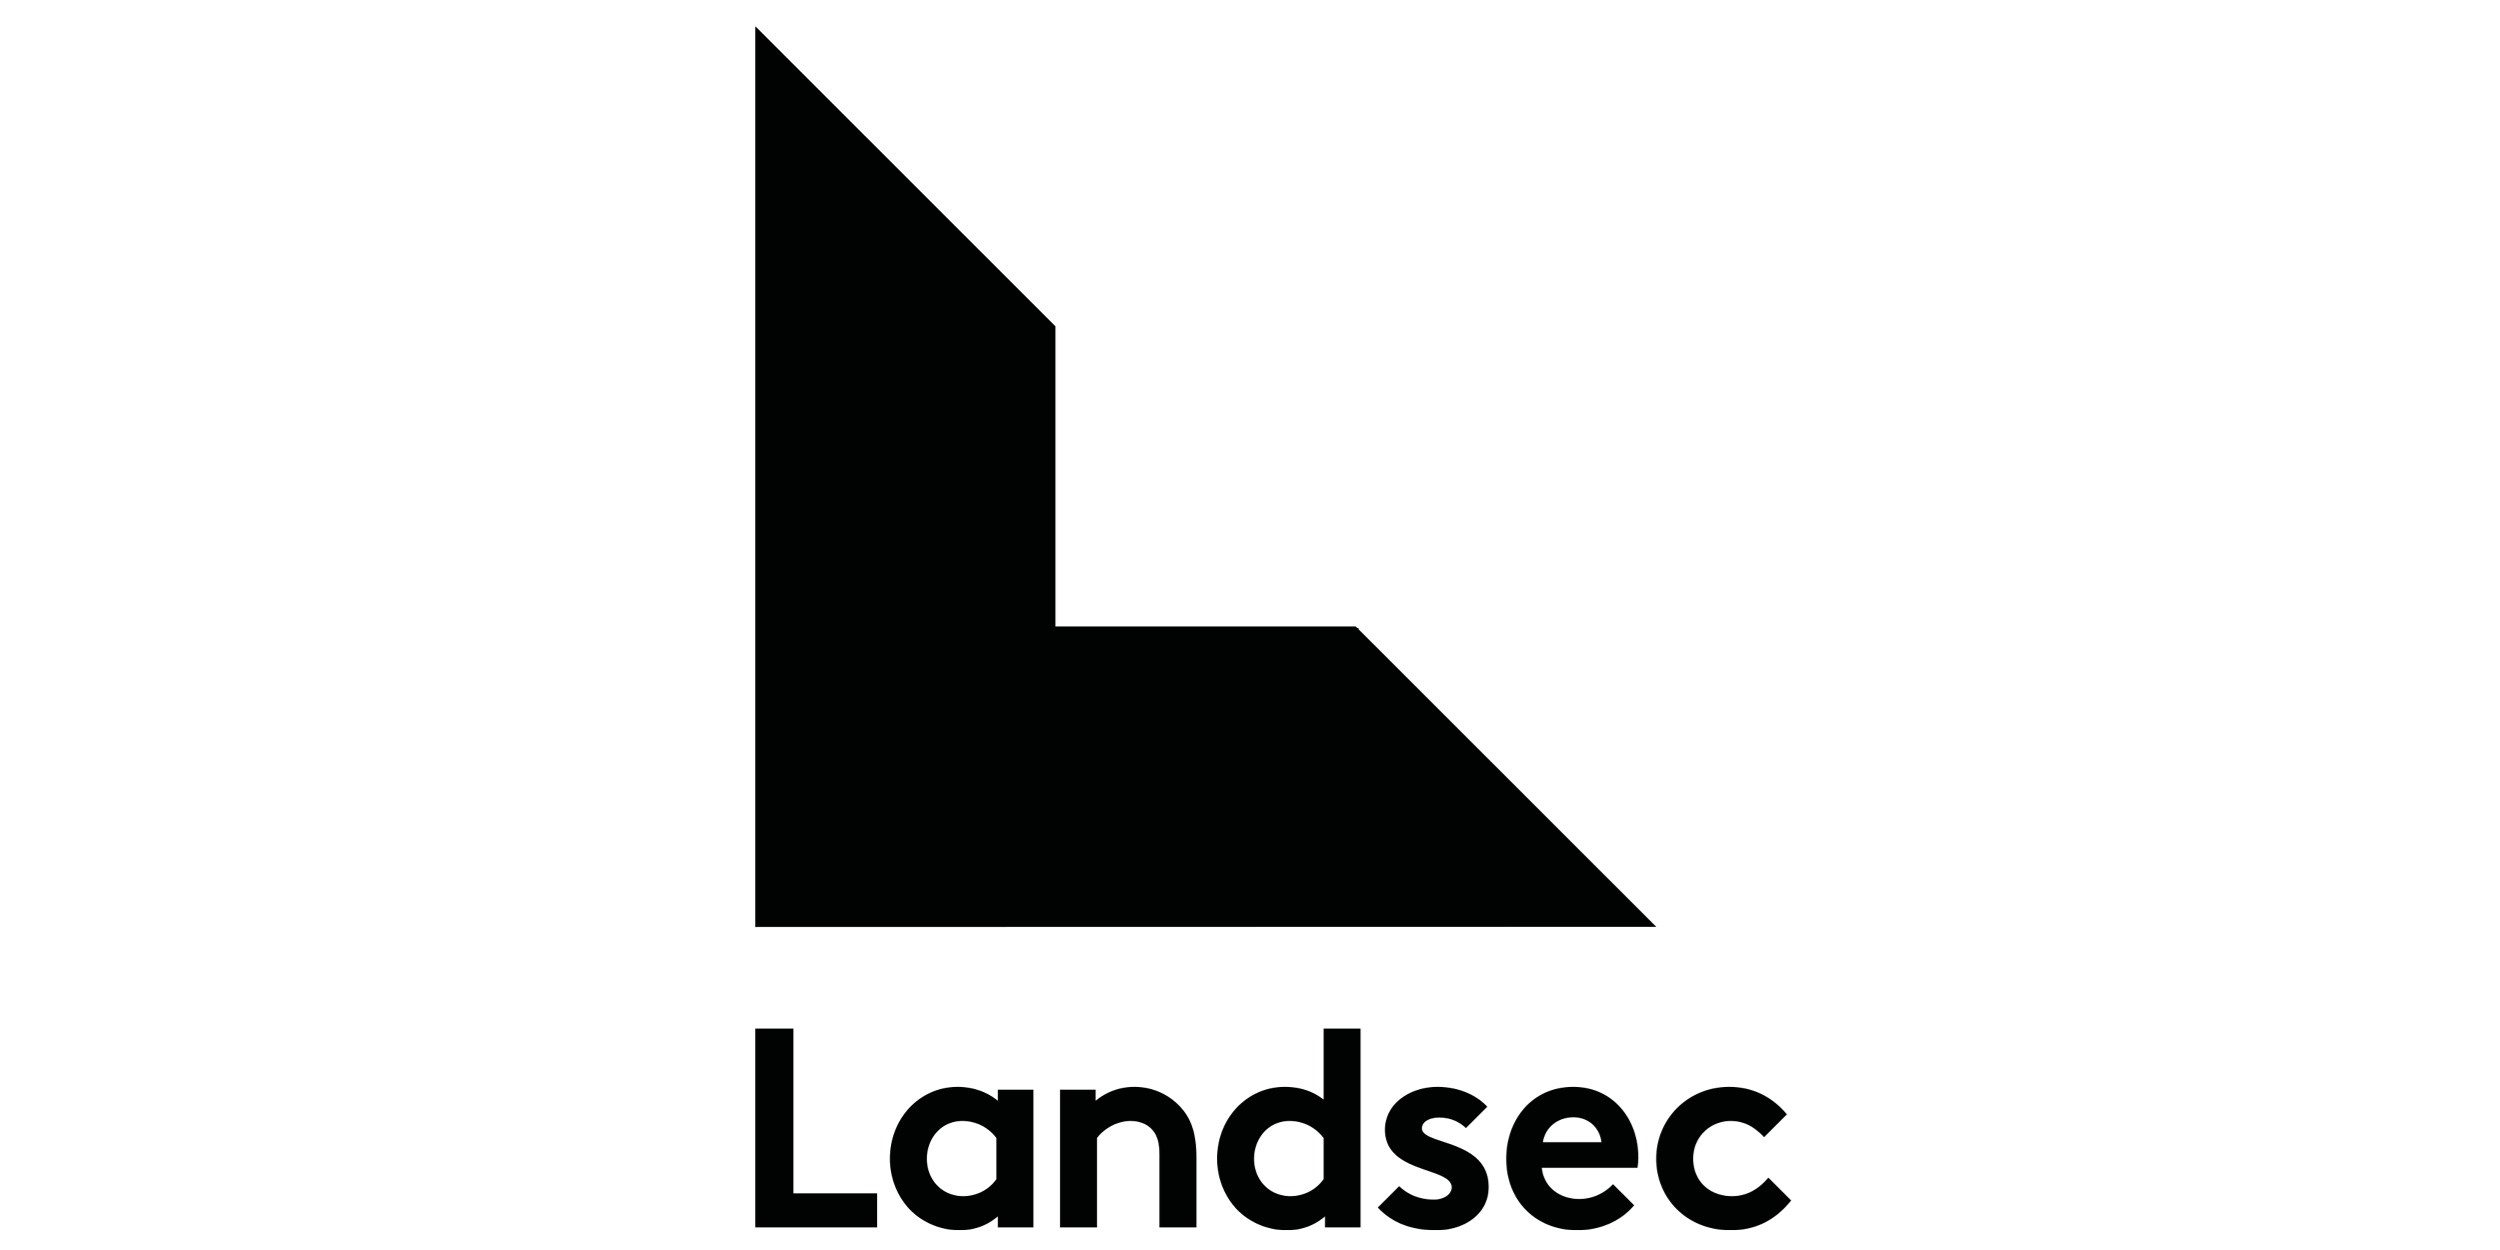 Landsec